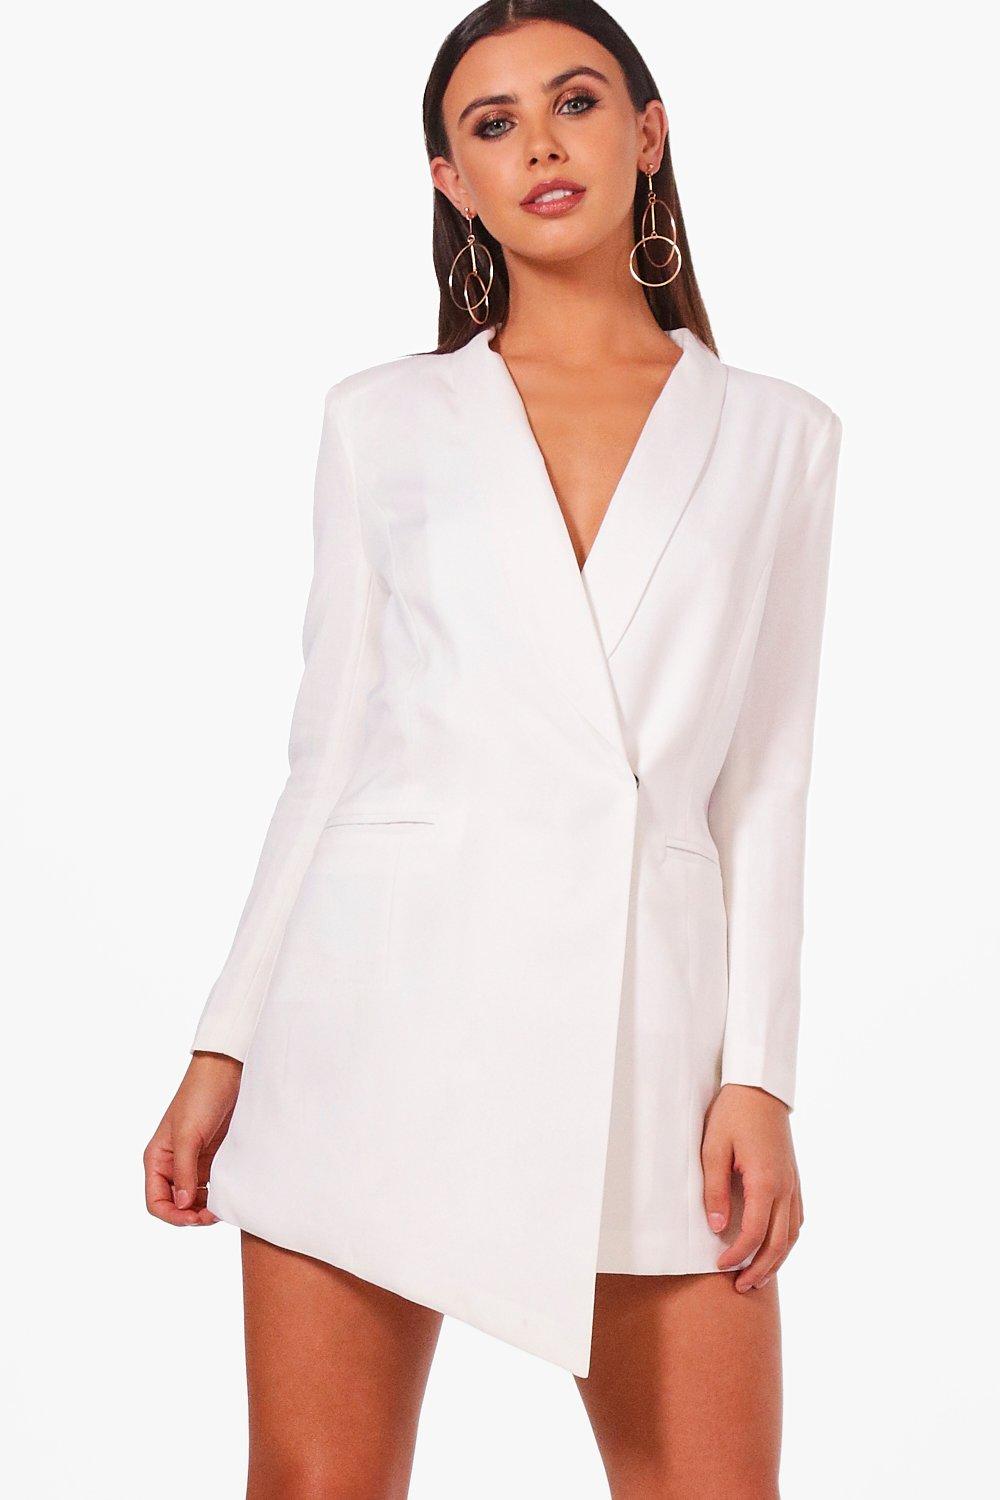 white blazer dress